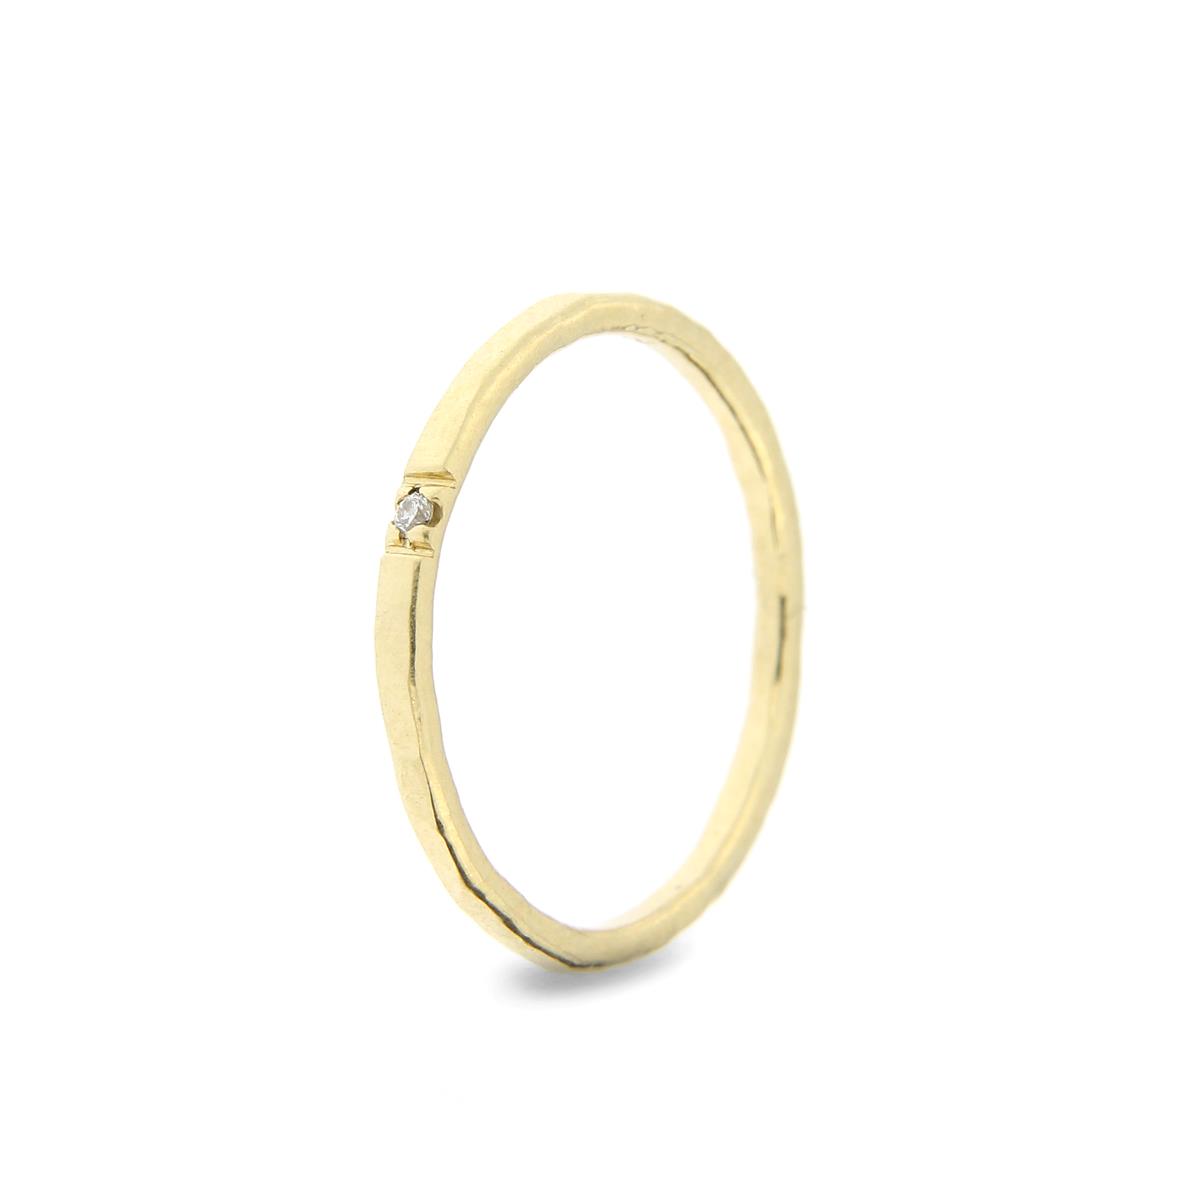 Katie g. Jewellery - aaa - Hammered Ring 1,5mm - Champagnergold 2 + 1 Diamond